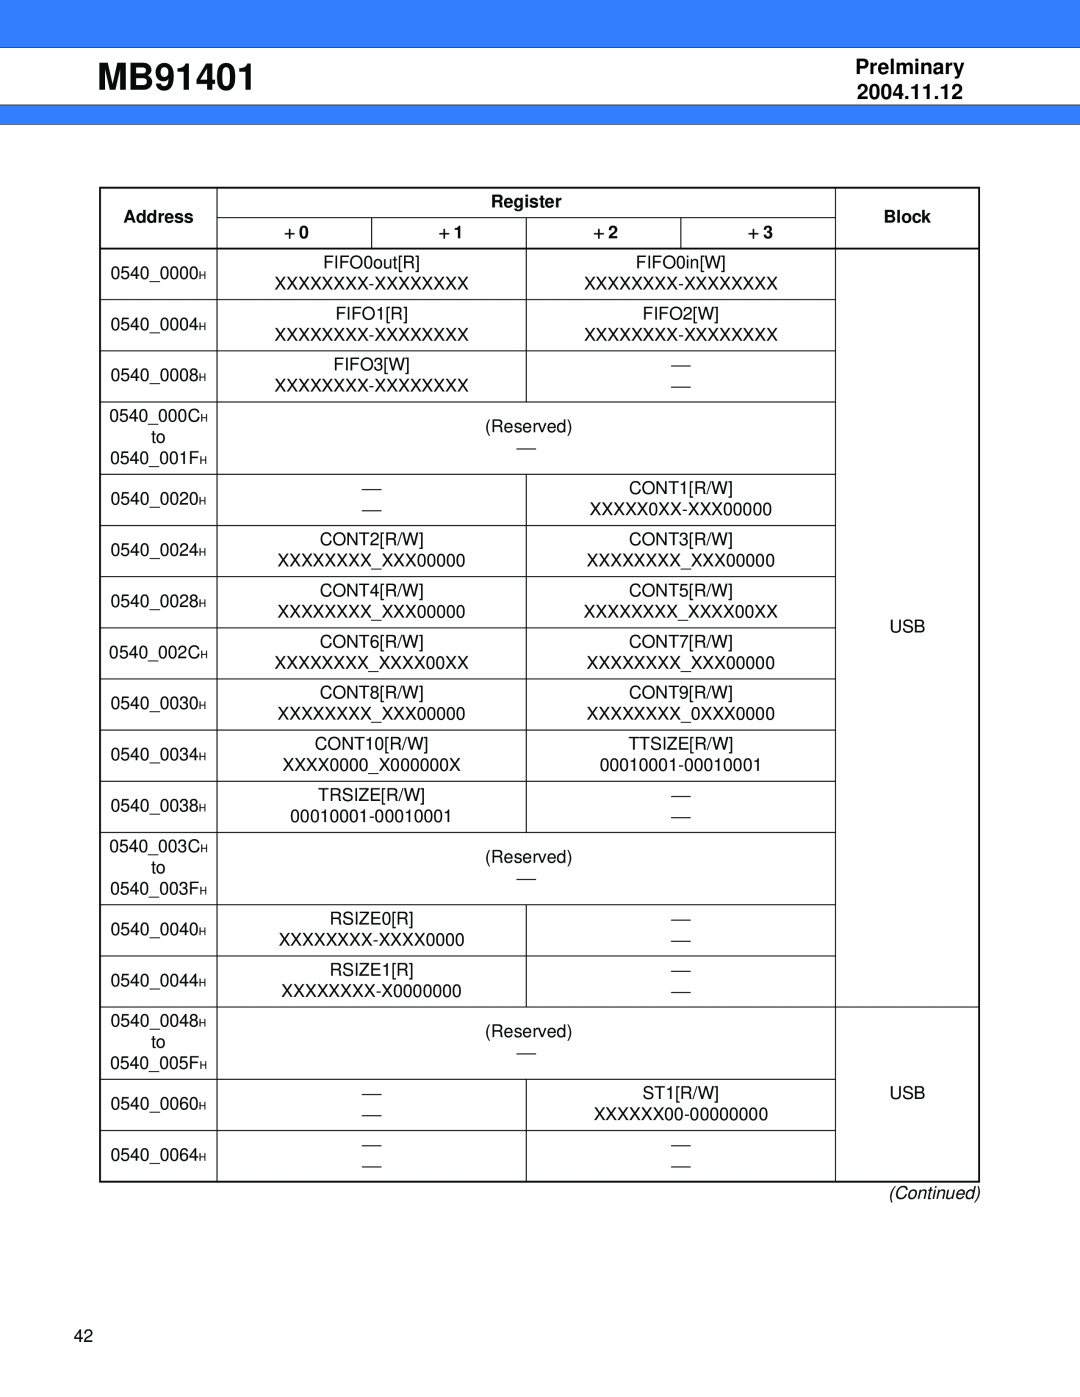 Fujitsu MB91401 manual Prelminary, 2004.11.12, Address, Register, Block 